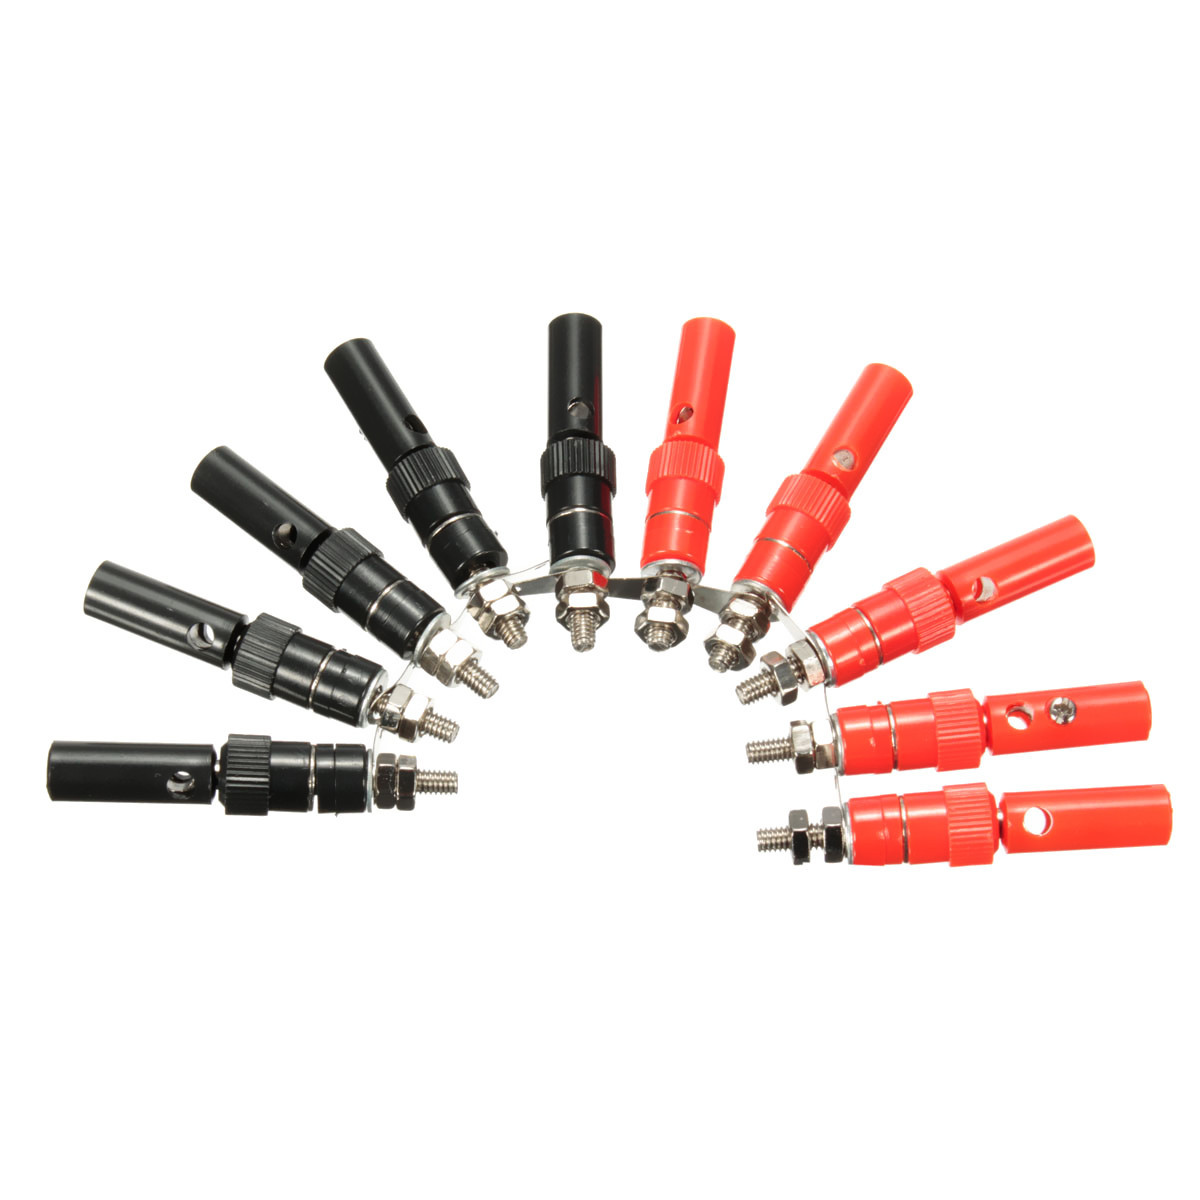 DANIU-30-Pairs-4mm-Terminal-Banana-Plug-Socket-Jack-Connectors-Instrument-Light-Tools-Black-and-Red-1358117-3